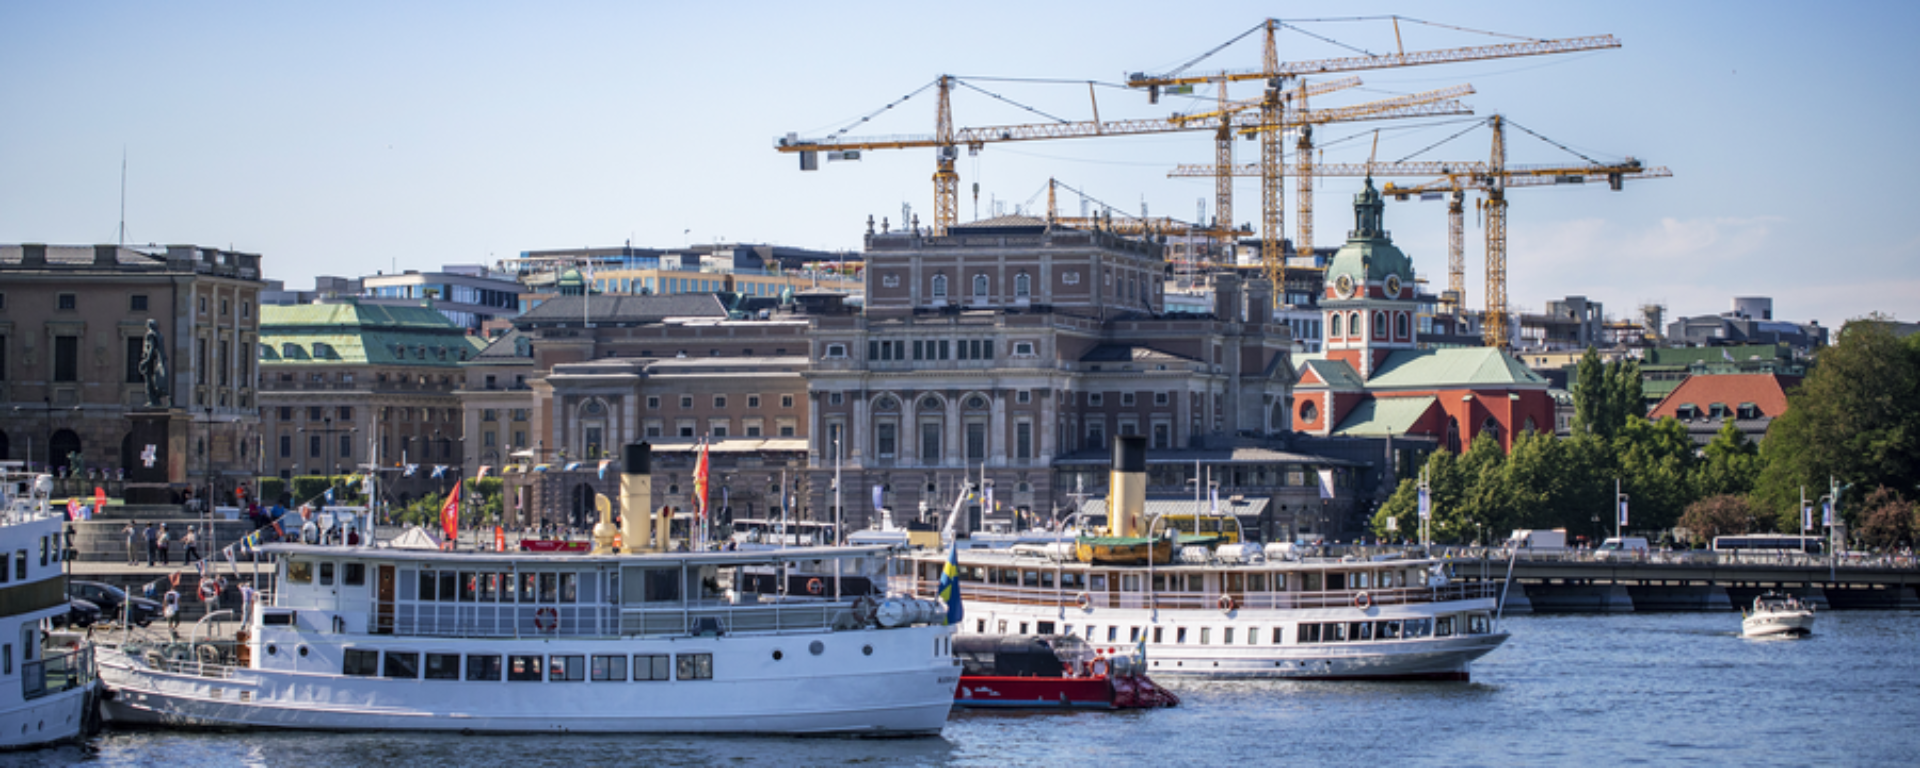 Blidosundsbolaget Mellersta skärgård Transdev Group ferry mobility company passagers passengers mobilité